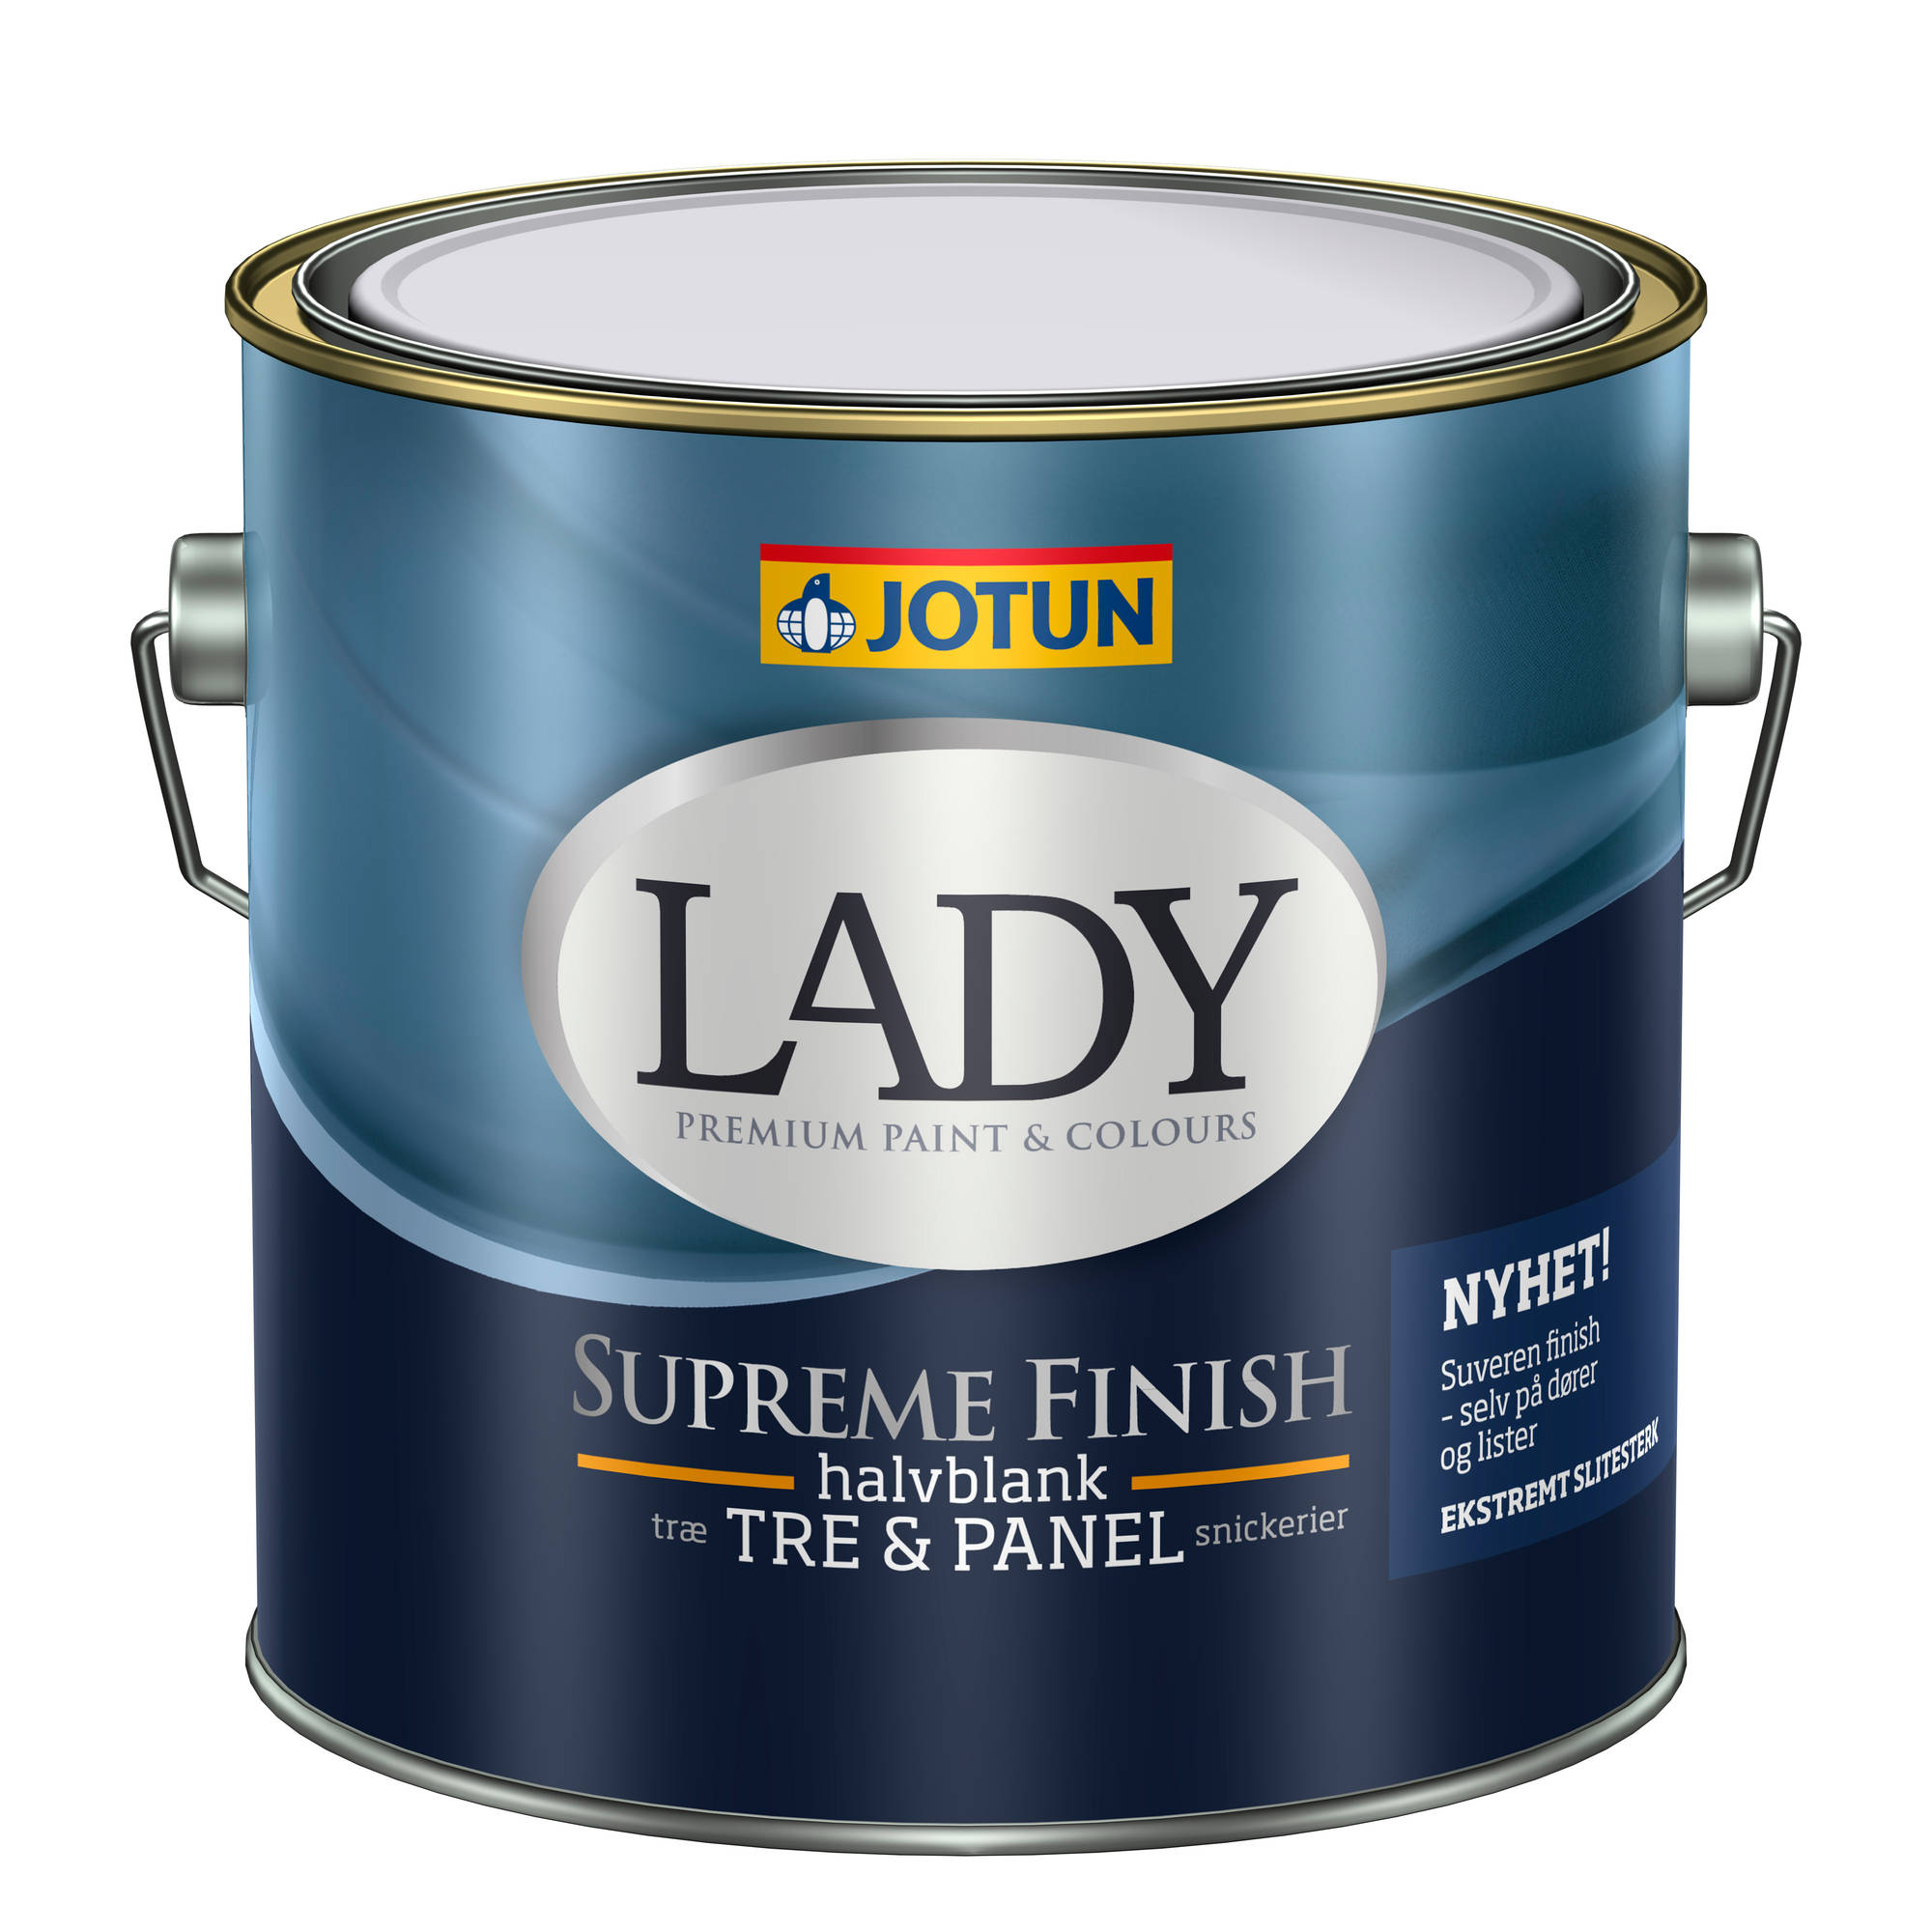 Lady Supreme finish halvblank, tre & panel - Finthus.no